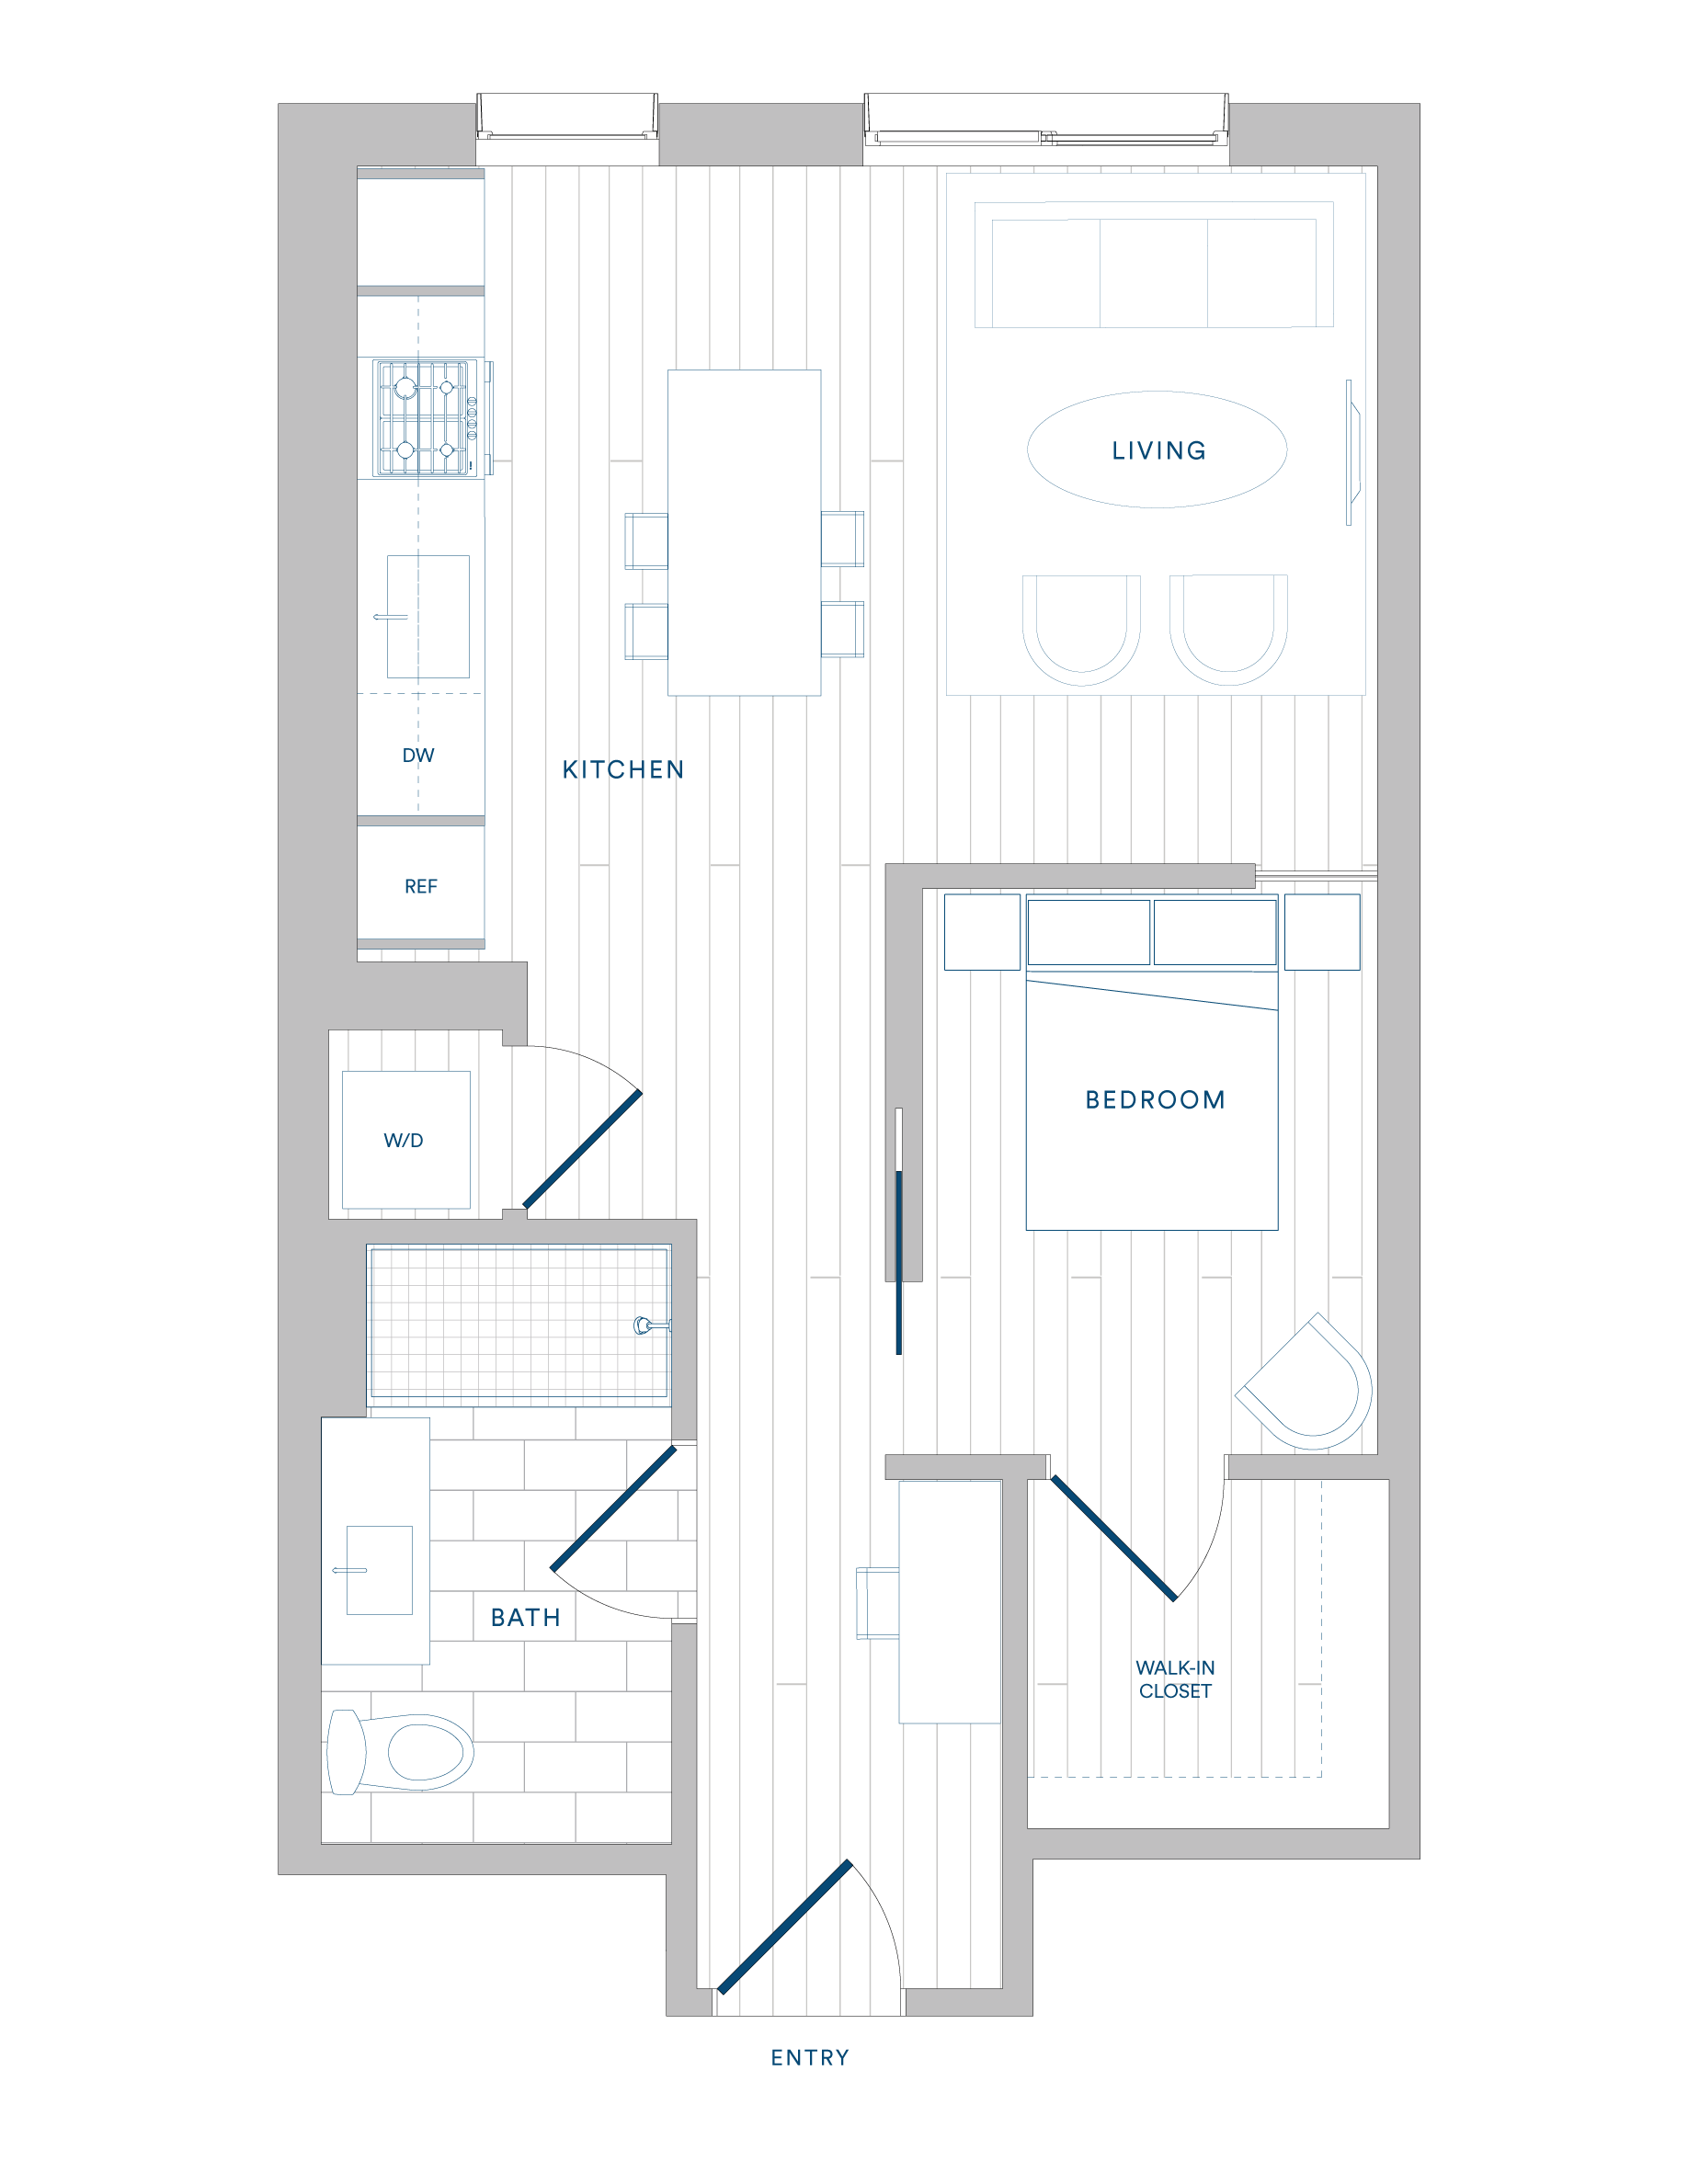 Floorplan for Apartment #1215, 1 bedroom unit at Margarite